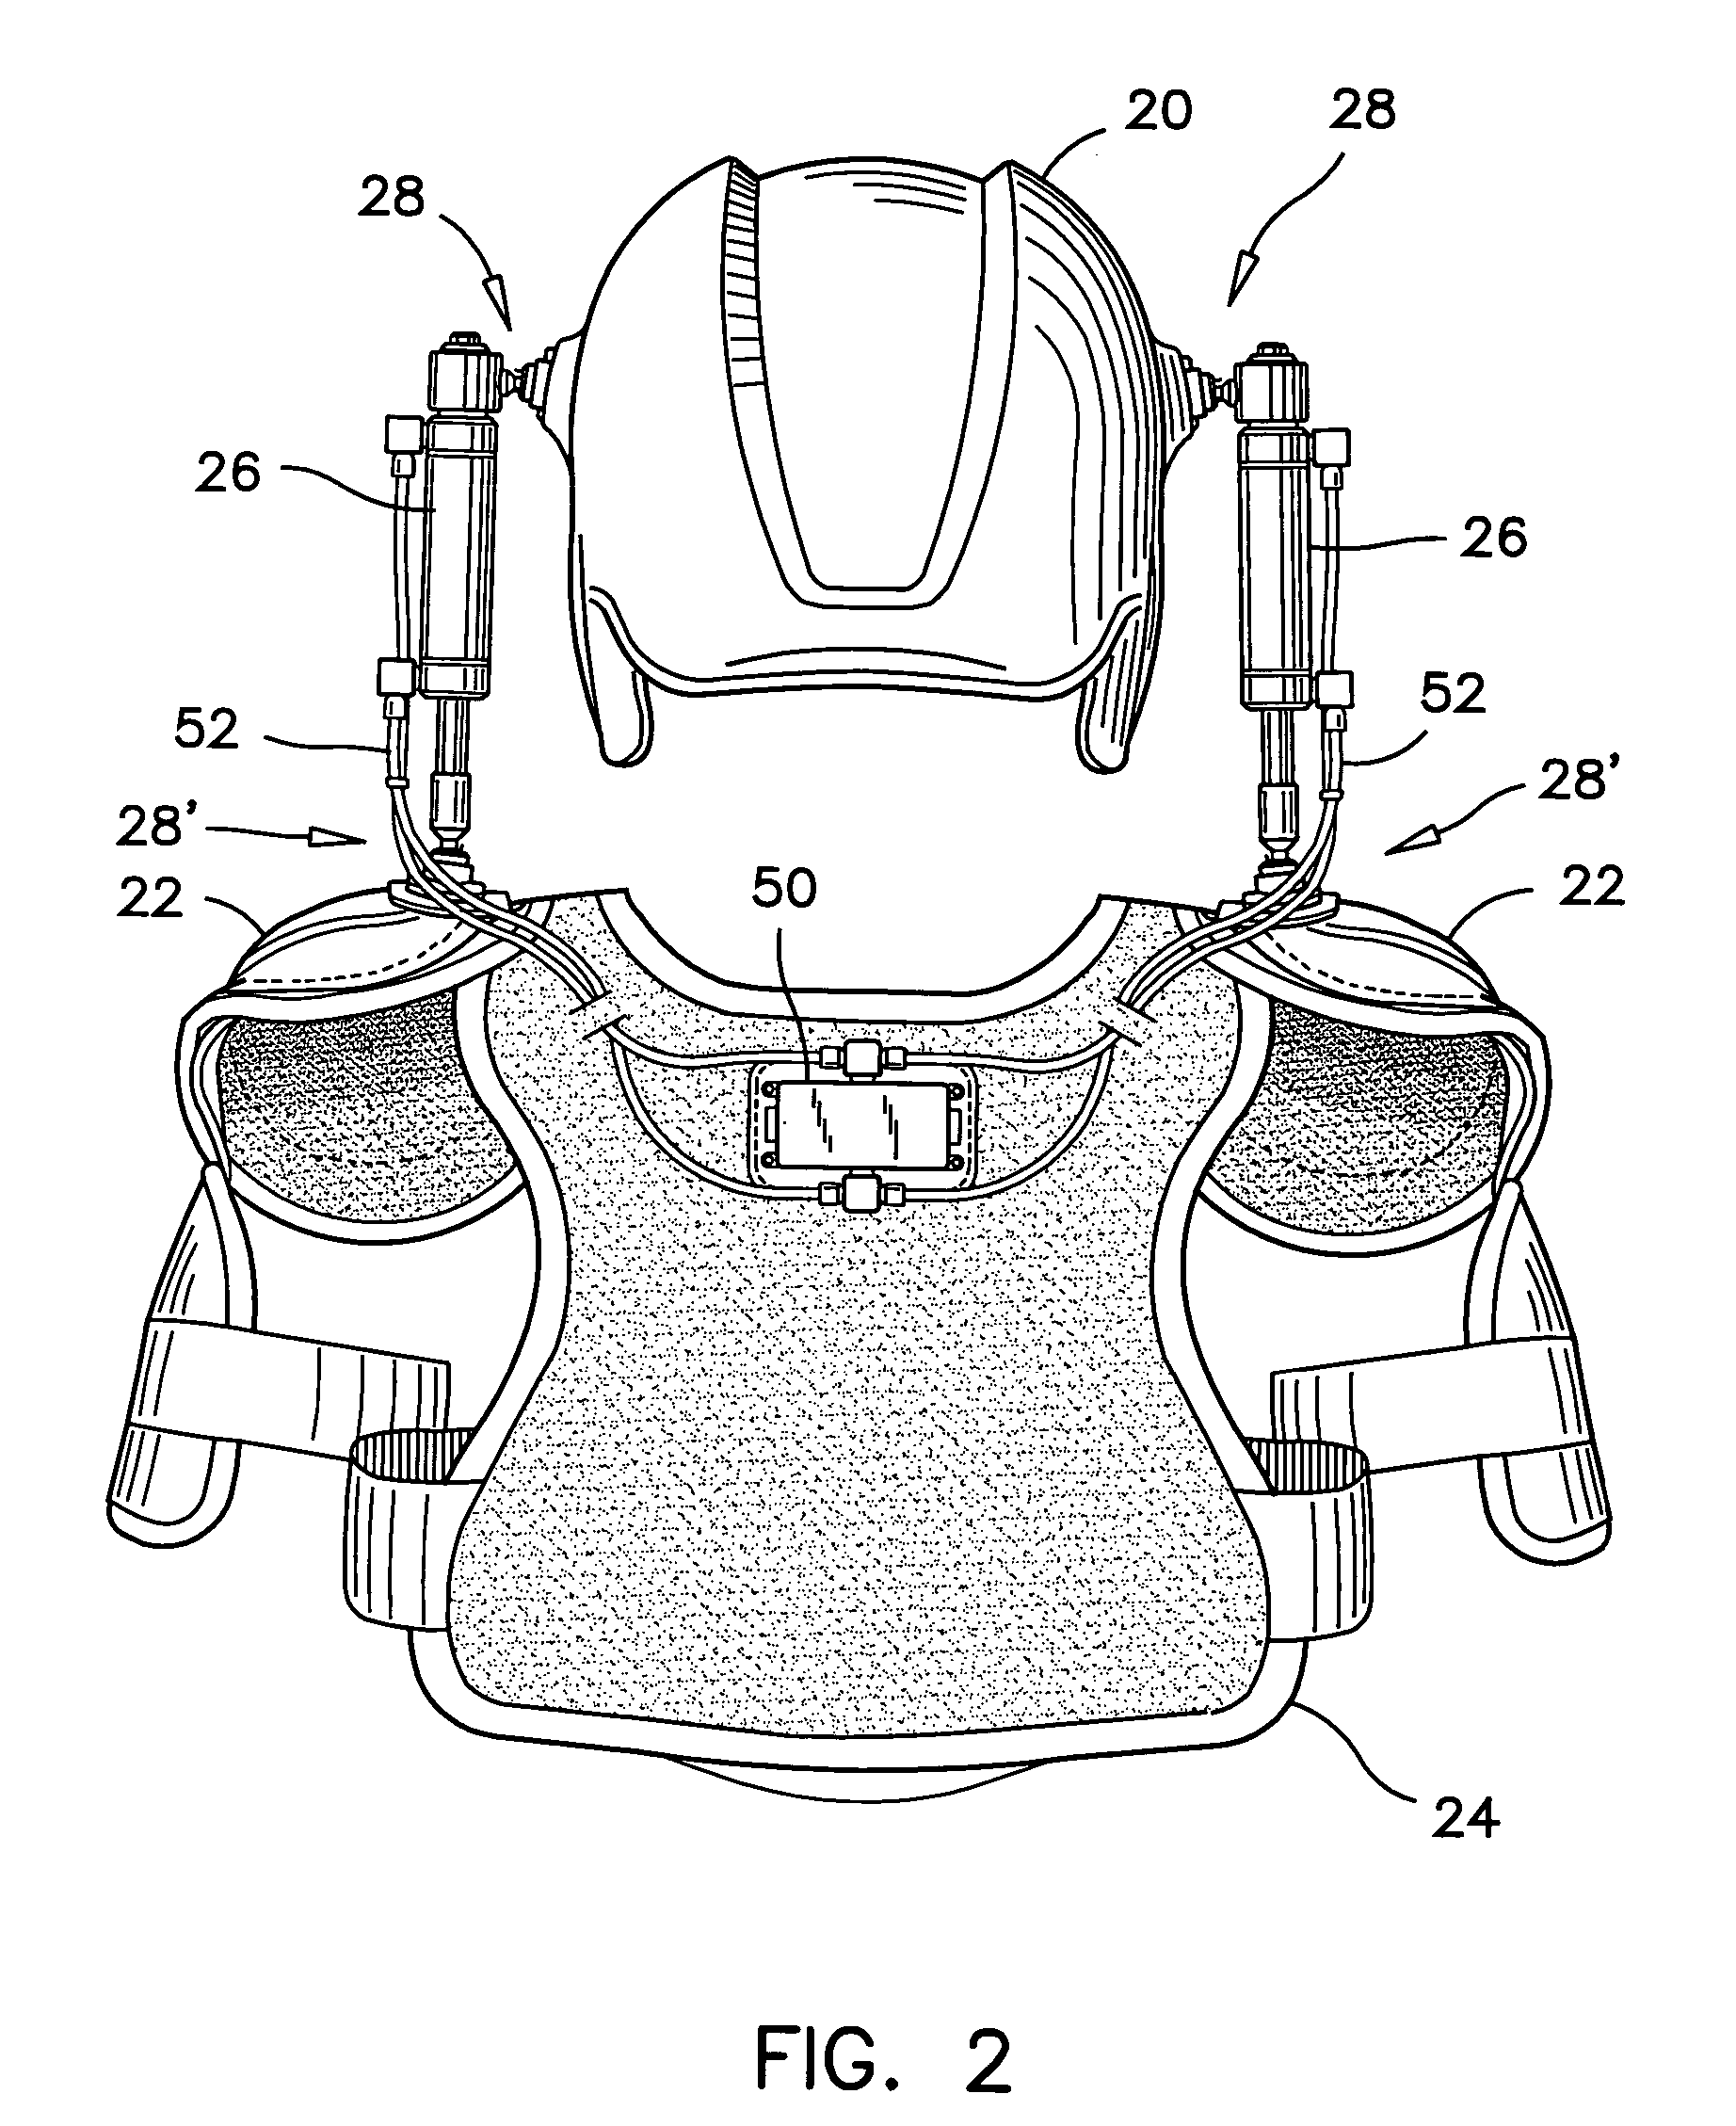 Helmet providing cervical spine protection